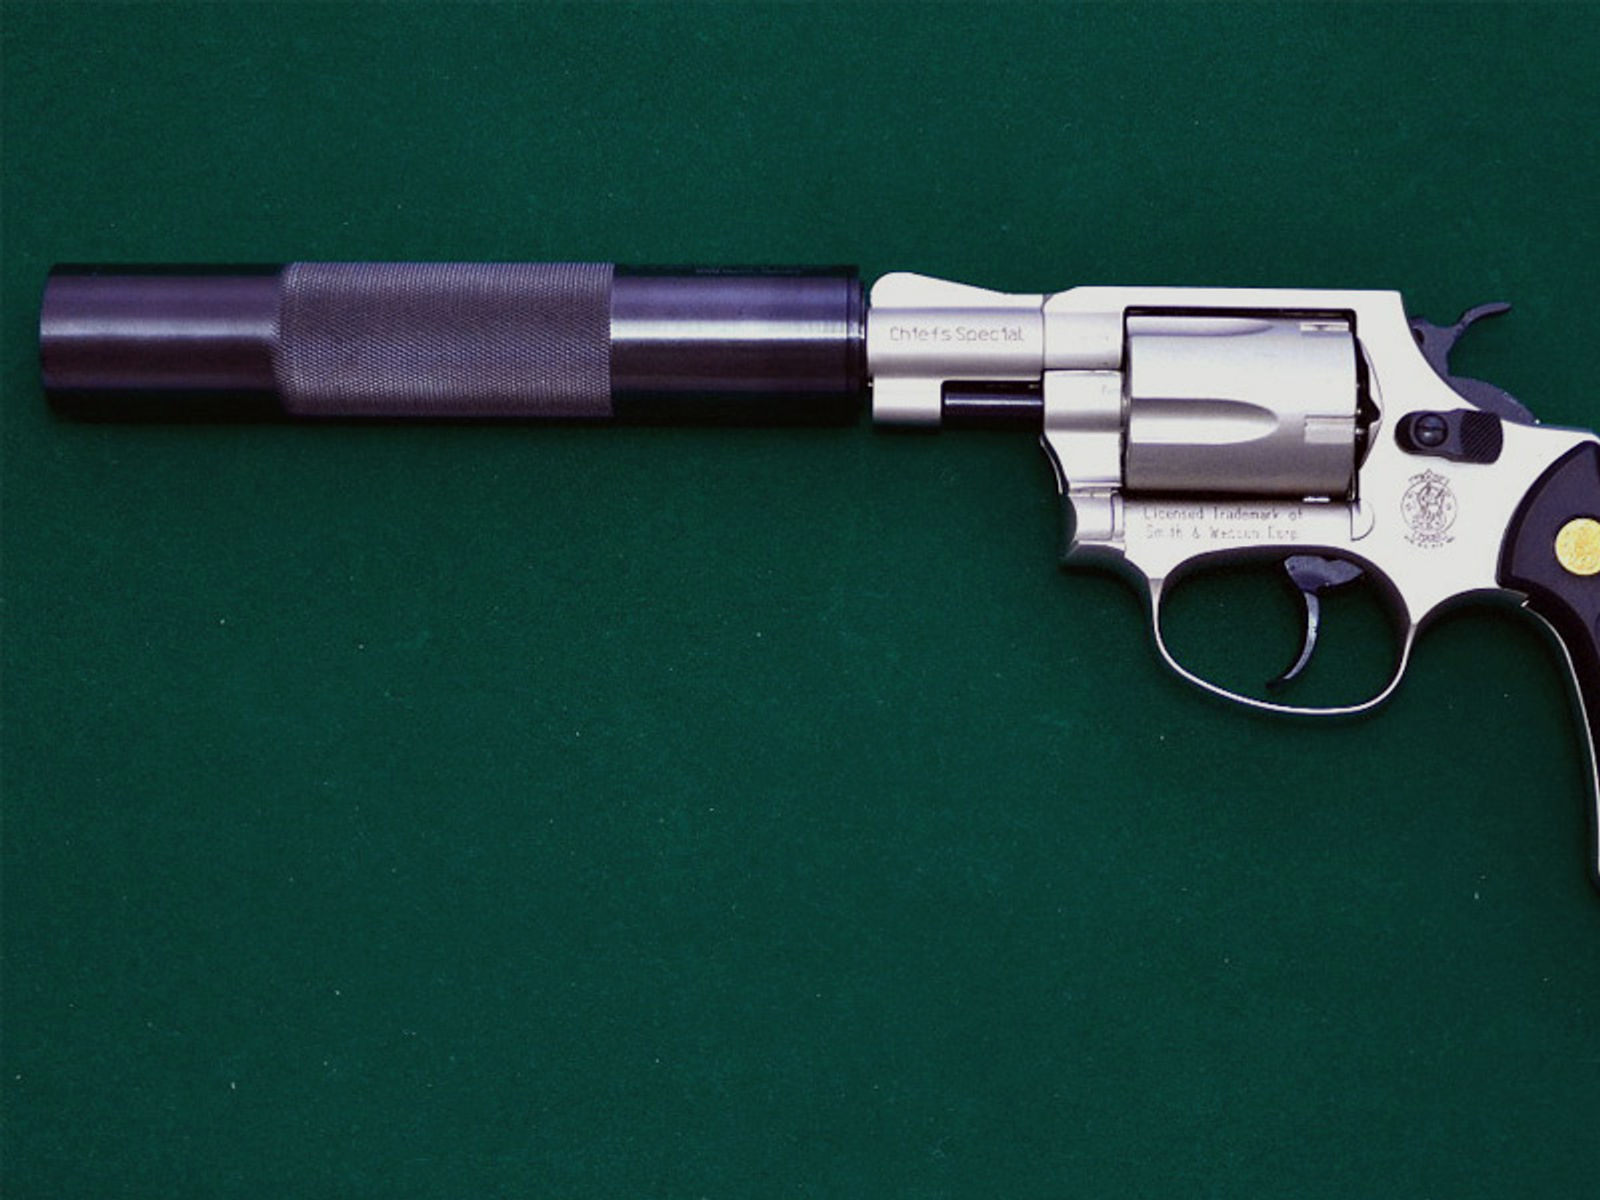 SchalldĂ¤mpfer fĂĽr Schreckschuss Revolver Steel Cop S&W Chiefs Special Colt Detective Special M10x1 Vollstahl (P18)